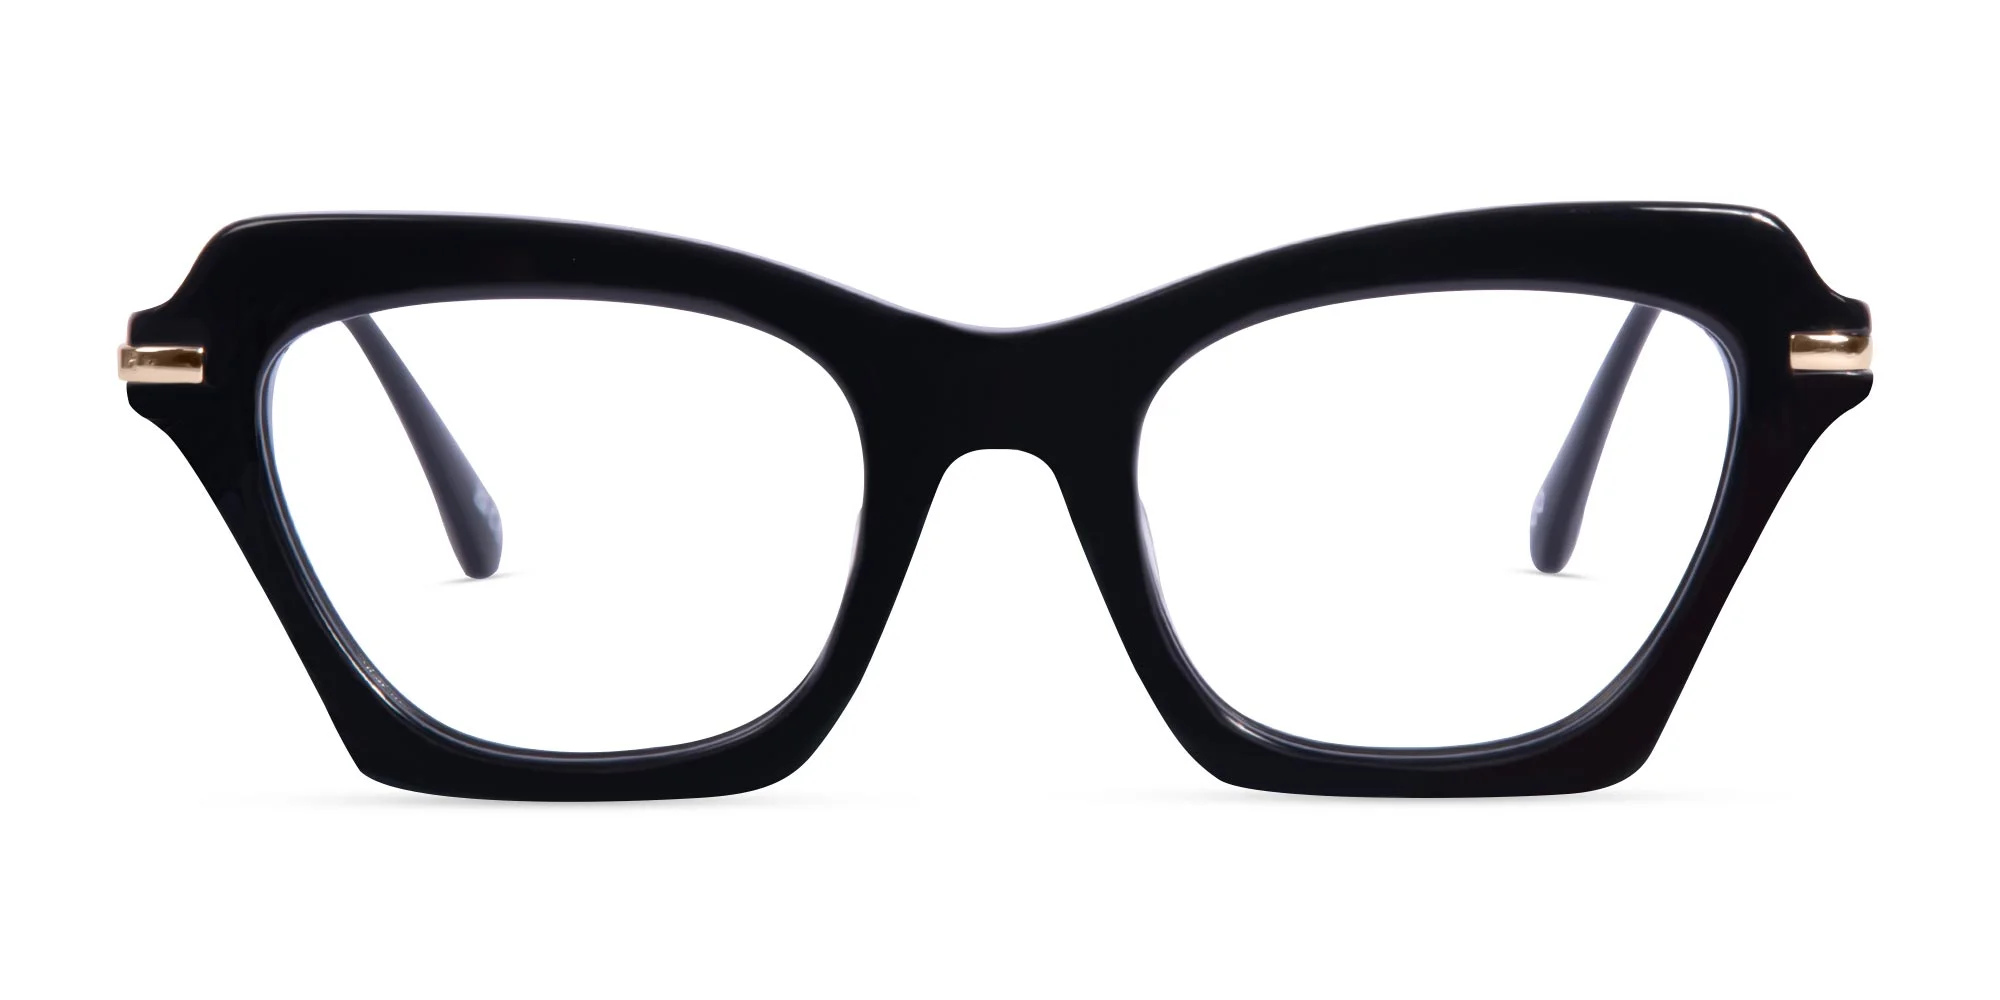 Double Glasses Case 2 in 1, For Reading Glasses & Sunglasses